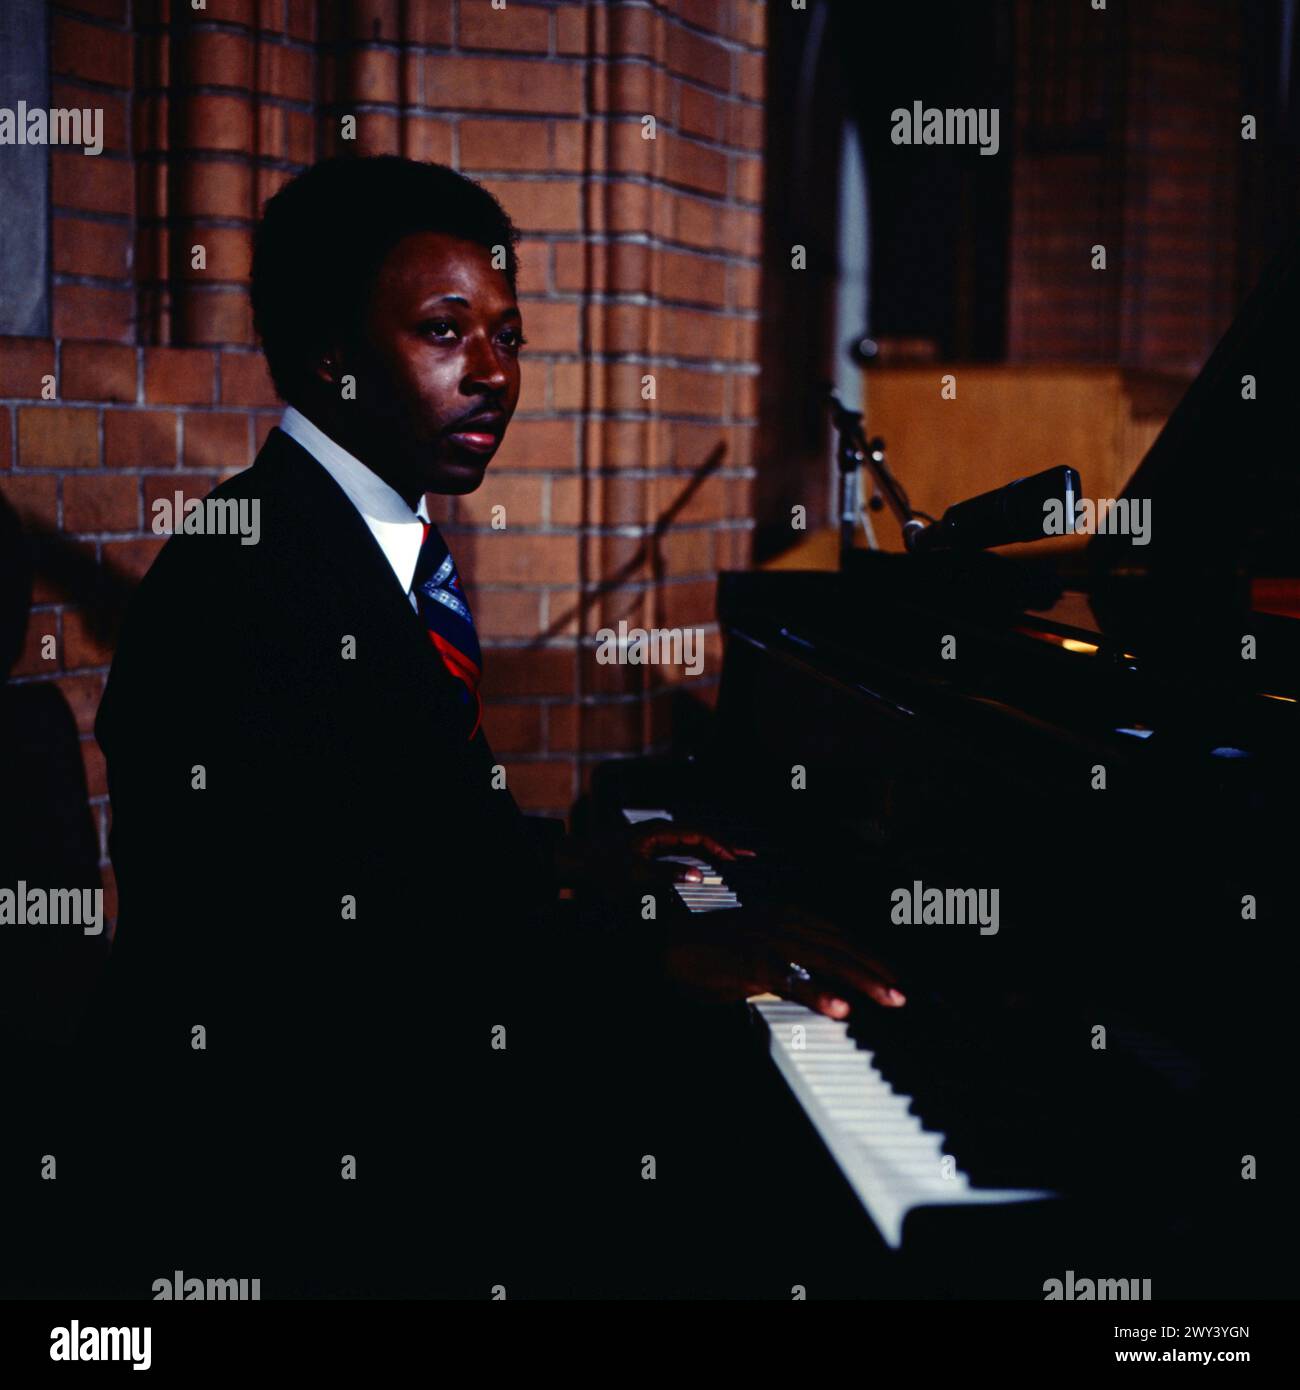 Dorothy Love Coats & Gospel Harmonettes, amerikanische Gospel Gruppe, mit Pianist Donald Woods (?) Am Klavier. Auftritt in einer Kirche, um 1969. Stockfoto